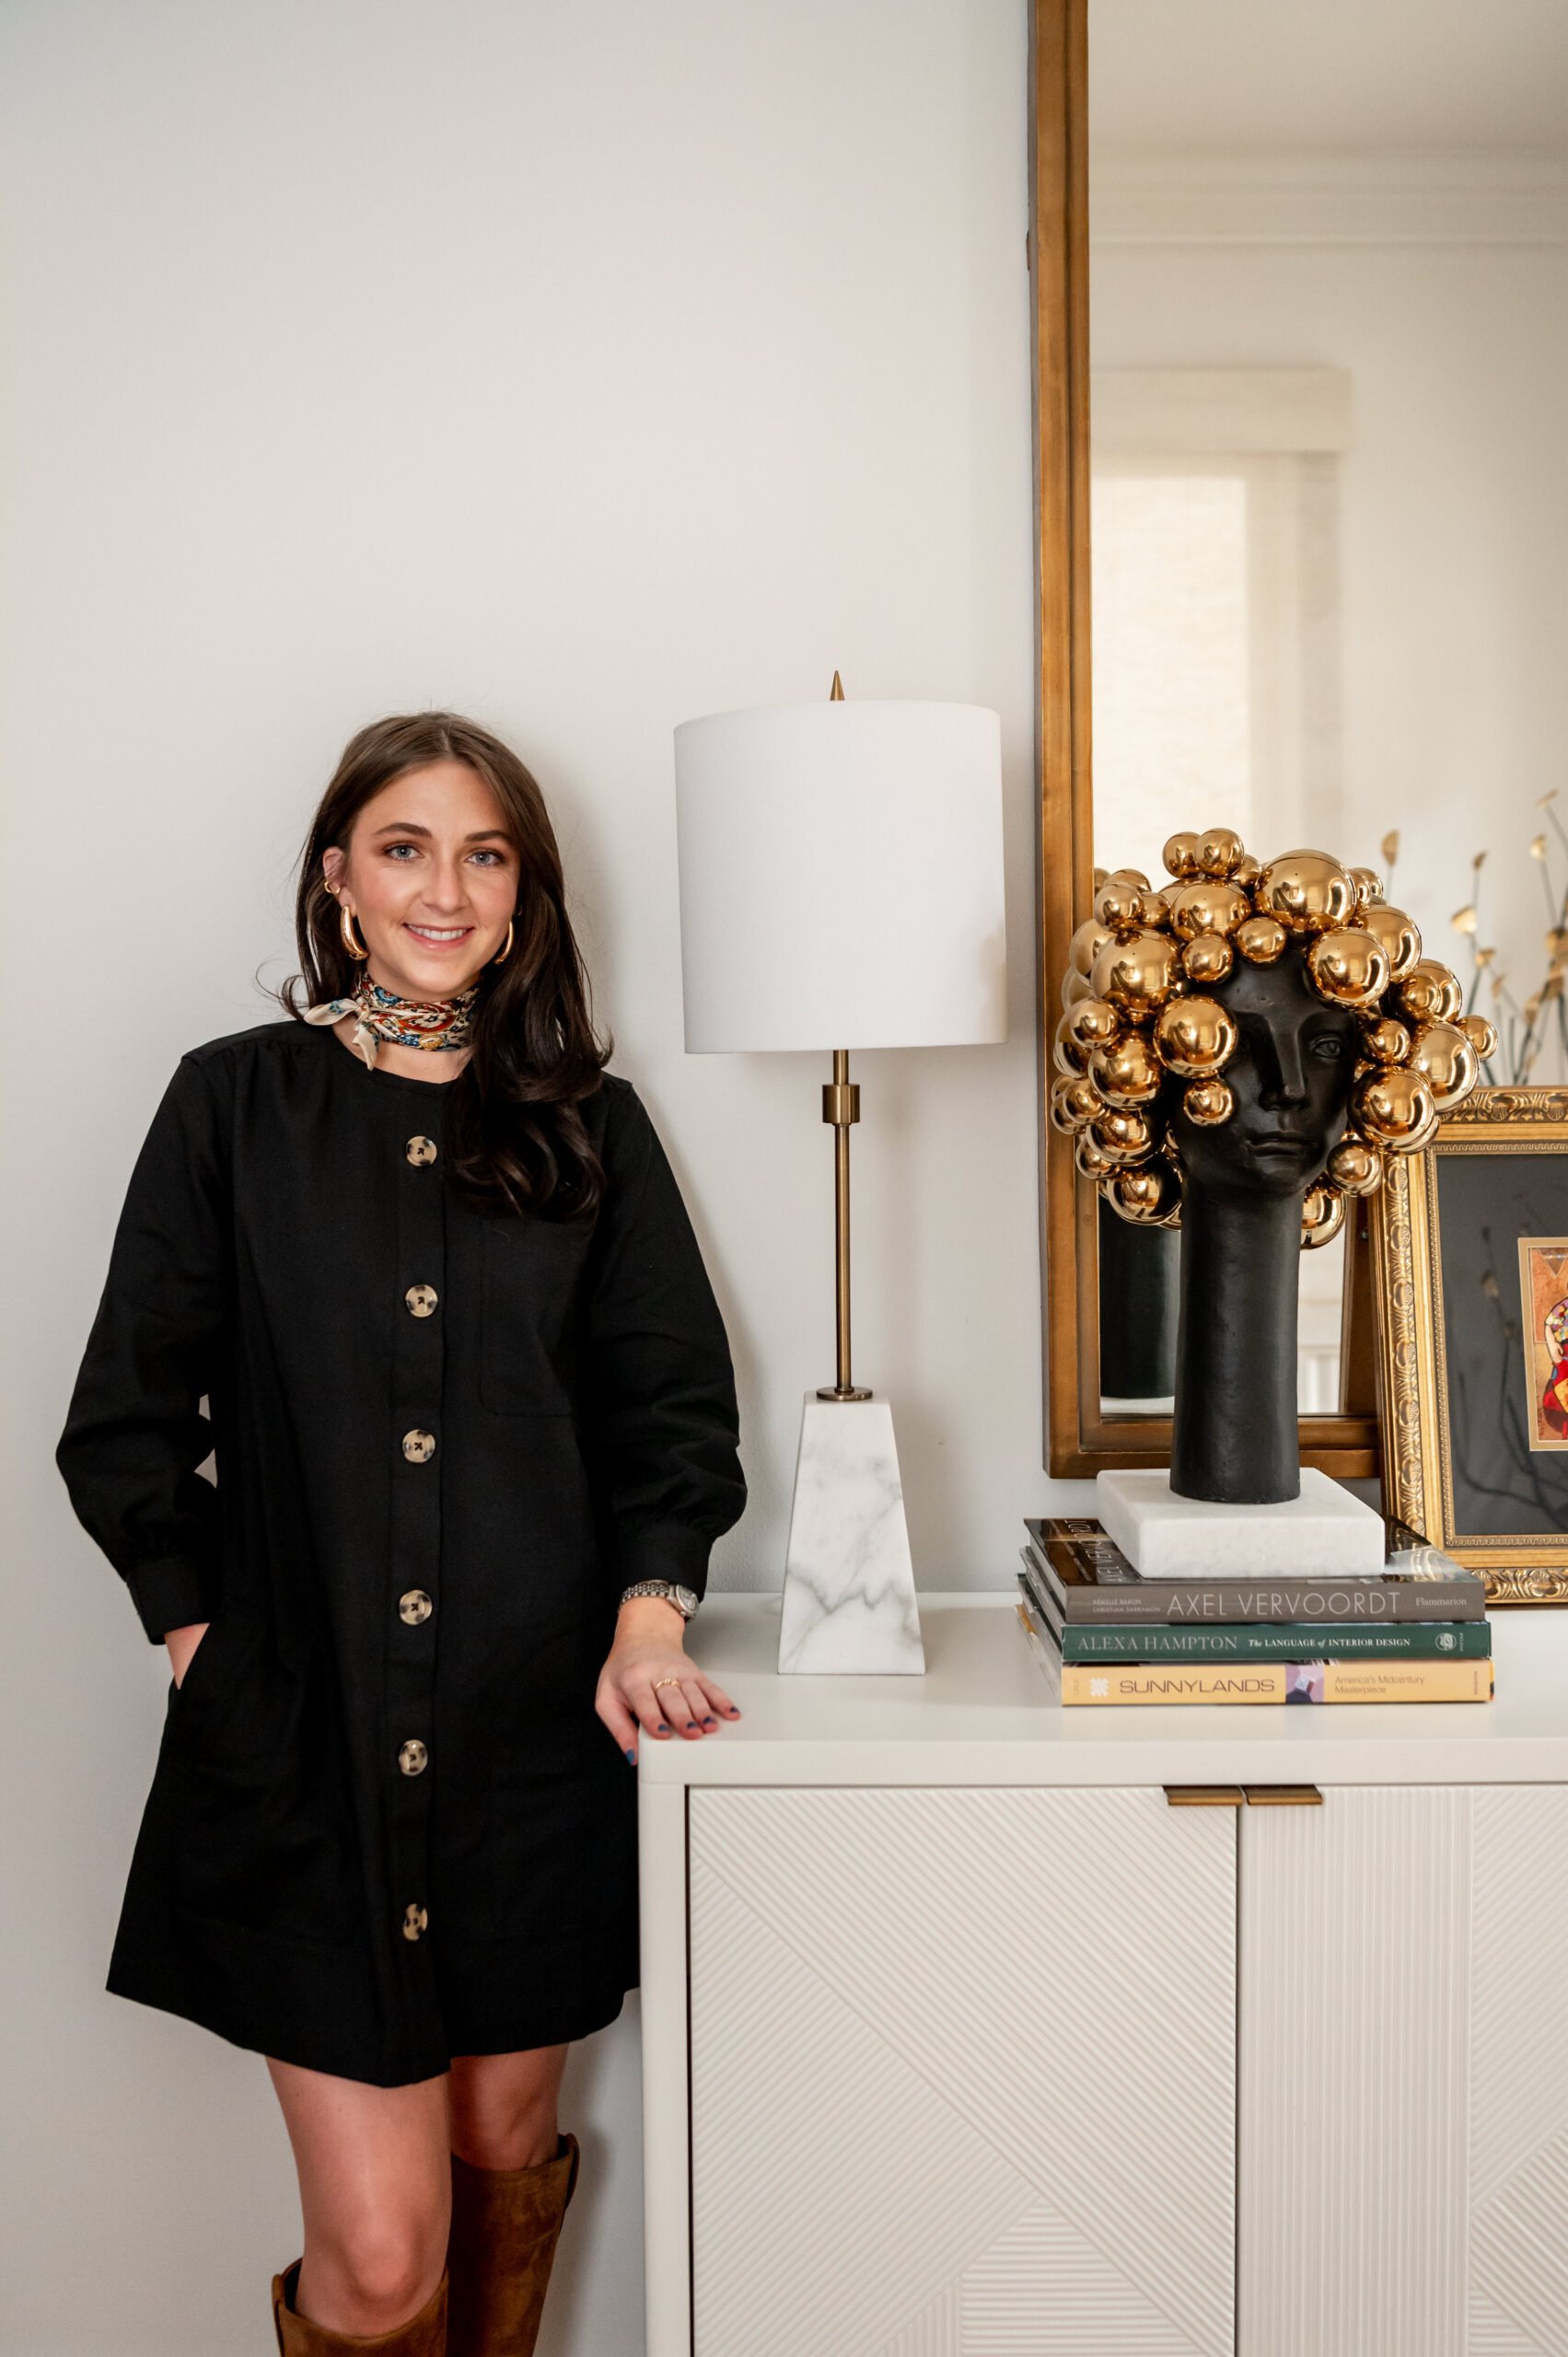 A women interior designer smiling posing for her interior design brand shoot